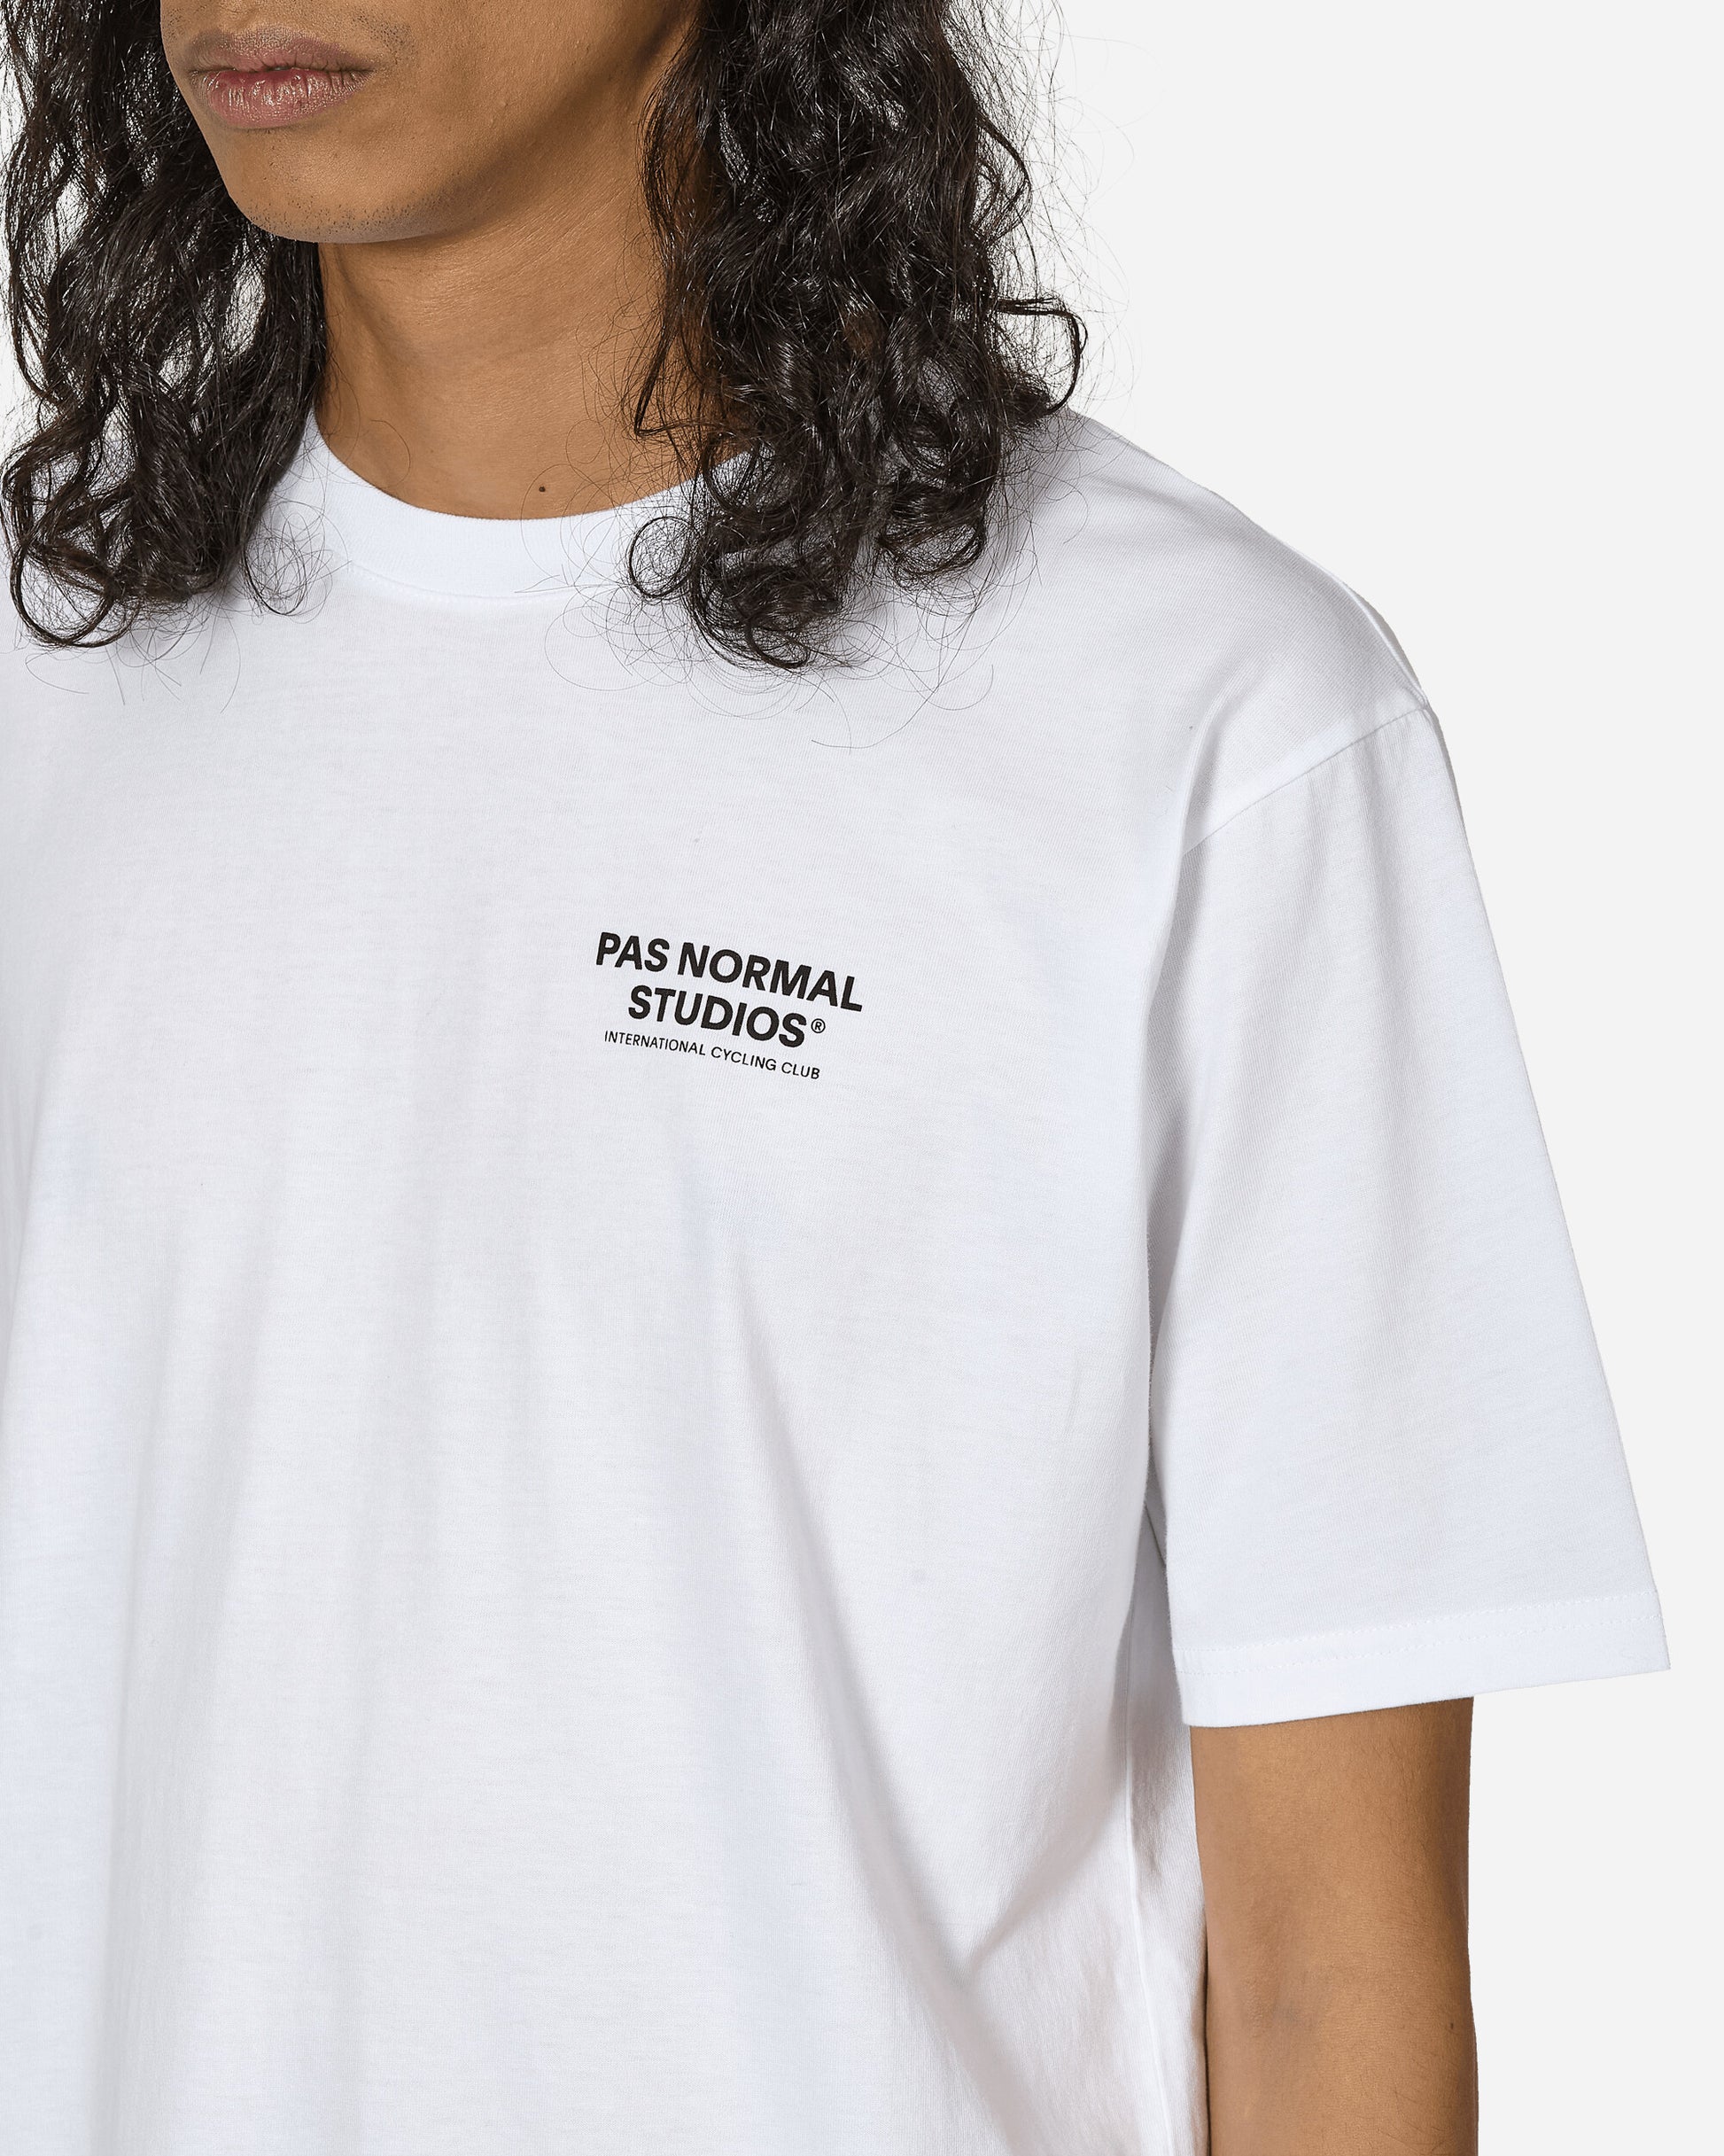 Pas Normal Studios Off-Race Pns T-Shirt White T-Shirts Shortsleeve NP2062HA 2100